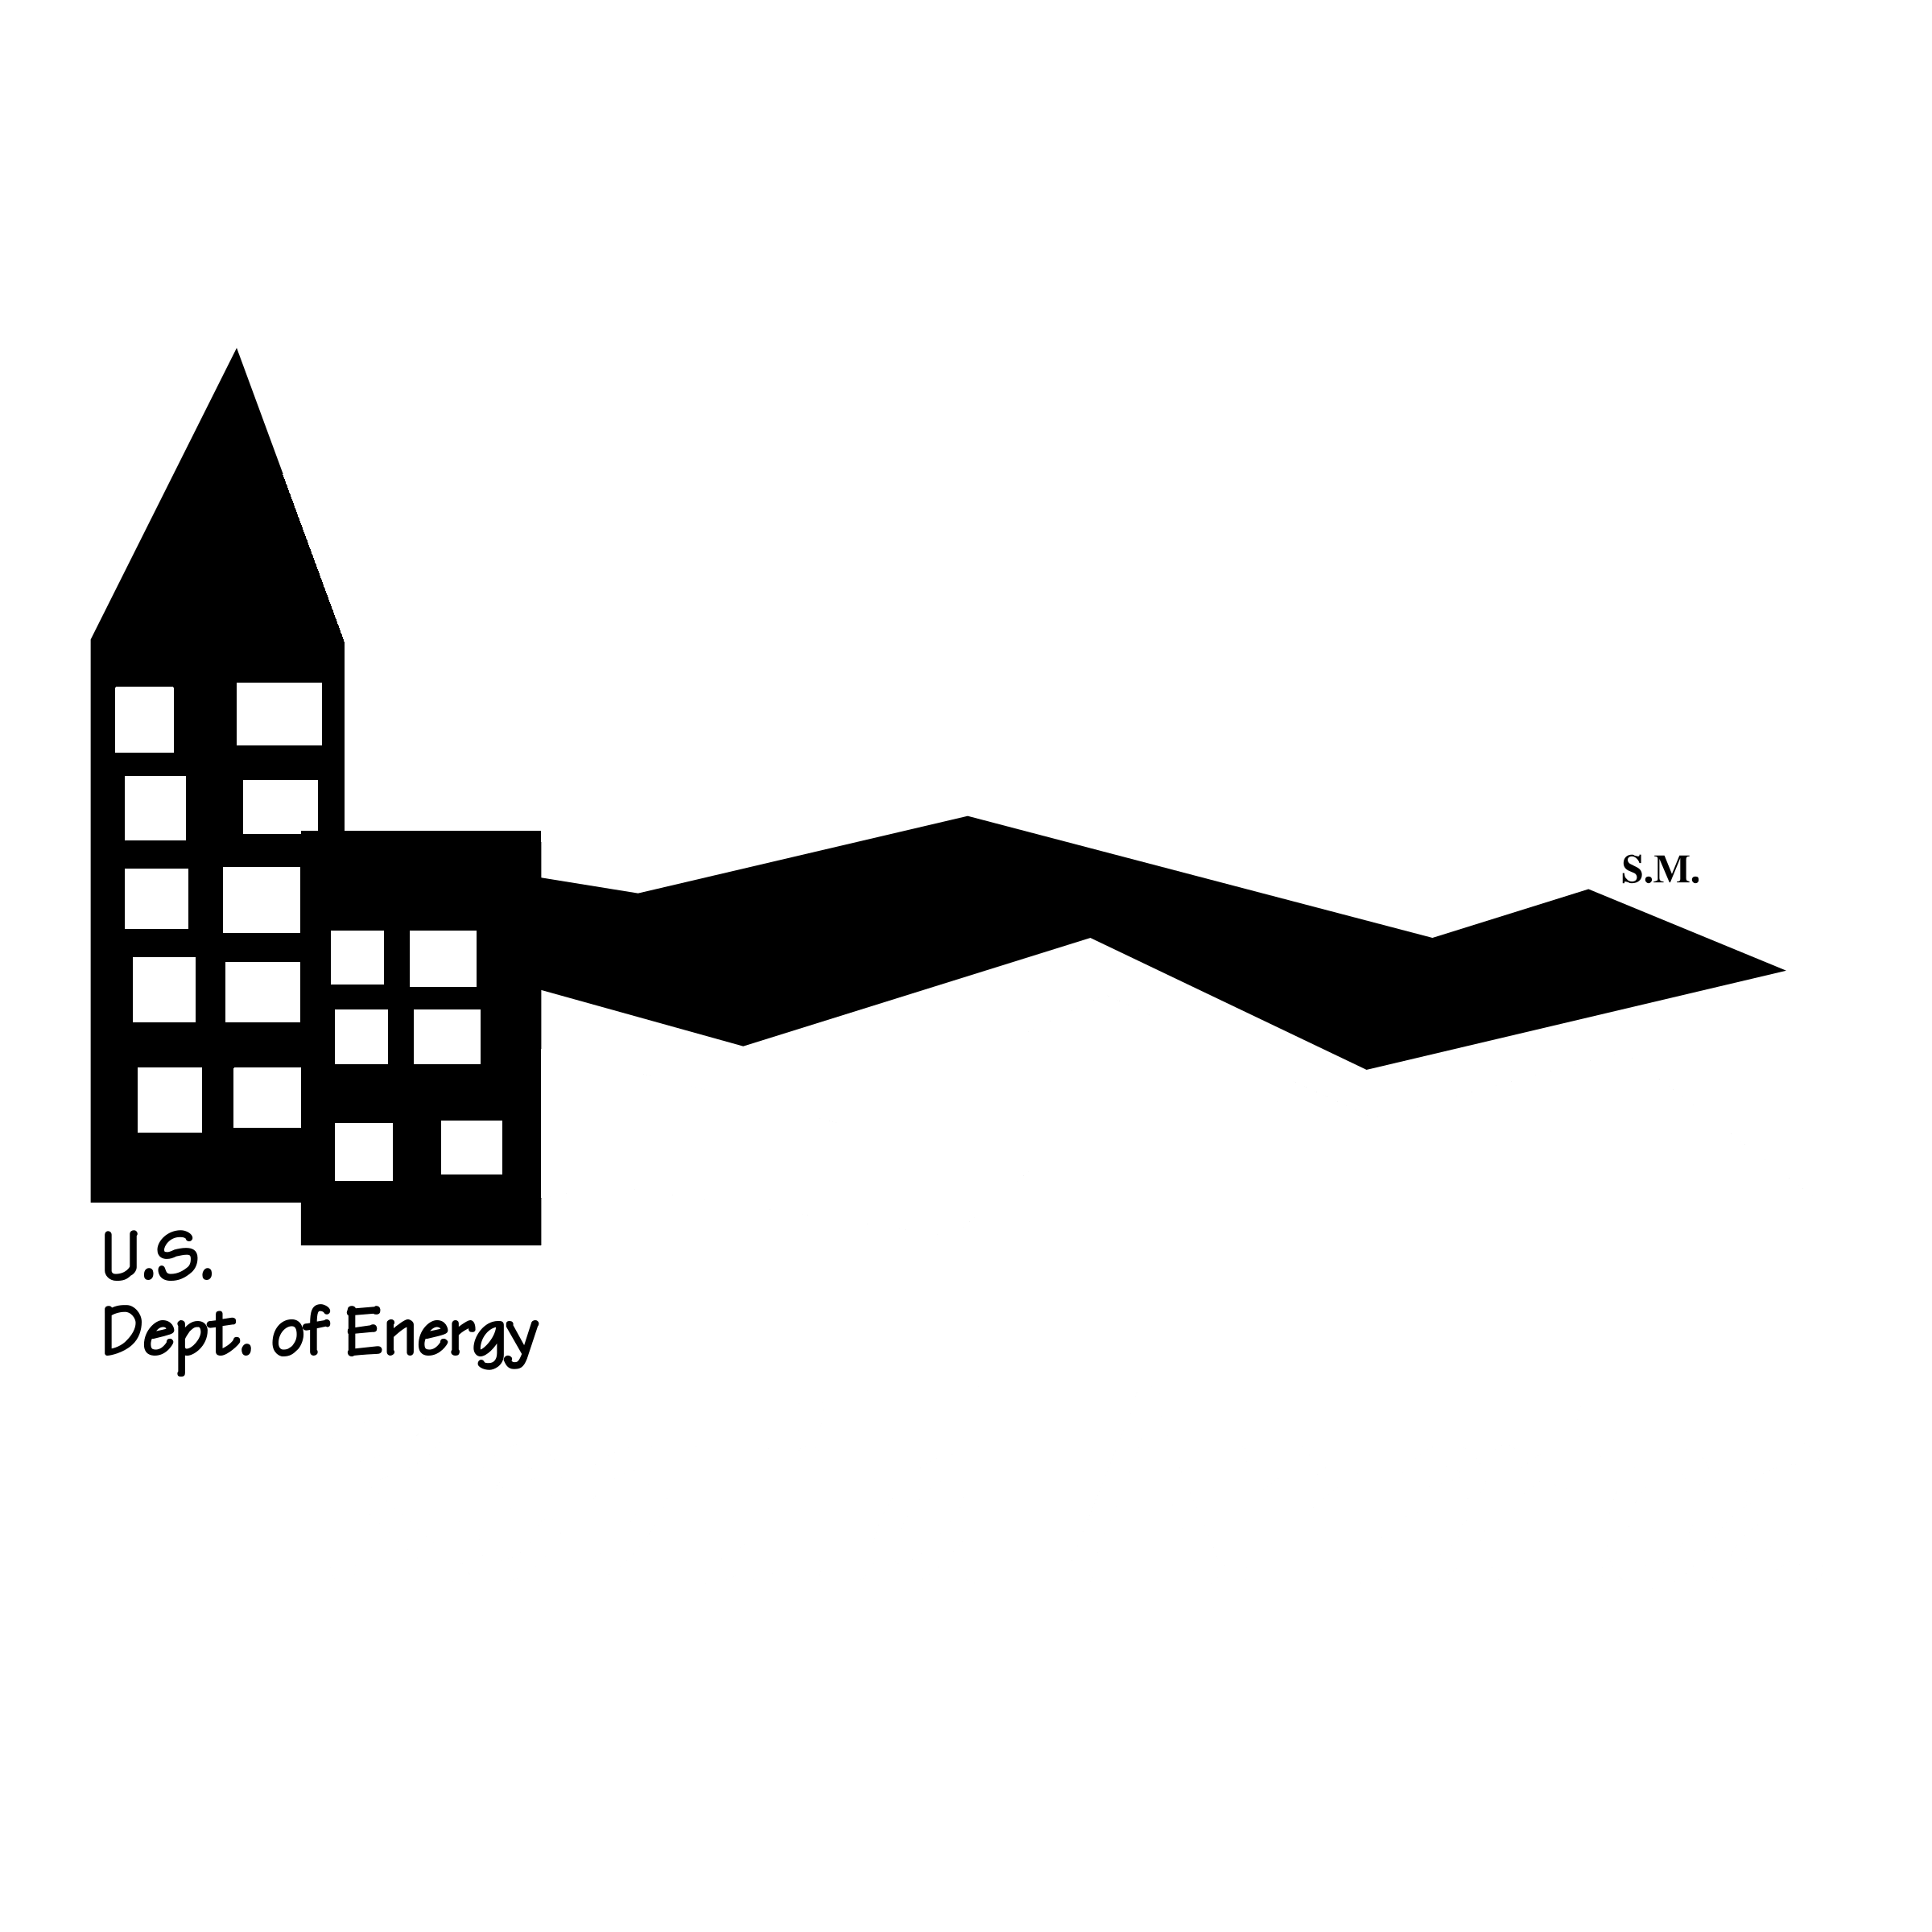 Rebuild White Logo - Rebuild America Logo PNG Transparent & SVG Vector - Freebie Supply